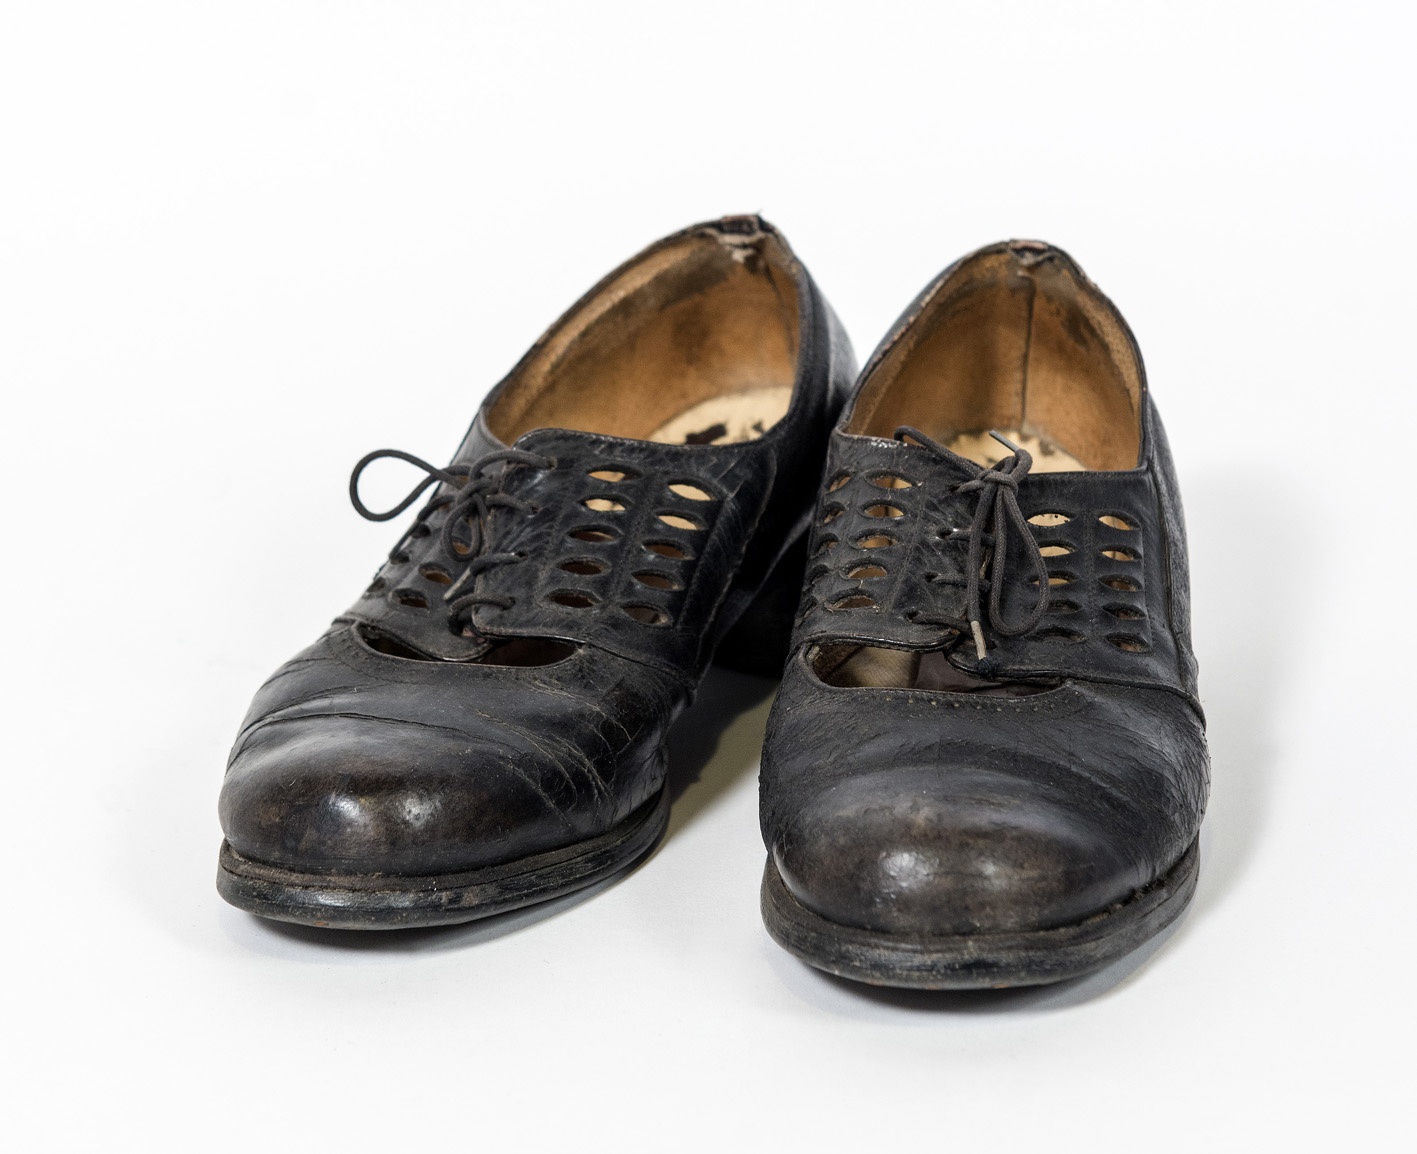 Női cipő / Spangl Schu (Bakonynánai Helytörténeti Gyűjtemény CC BY-NC-SA)